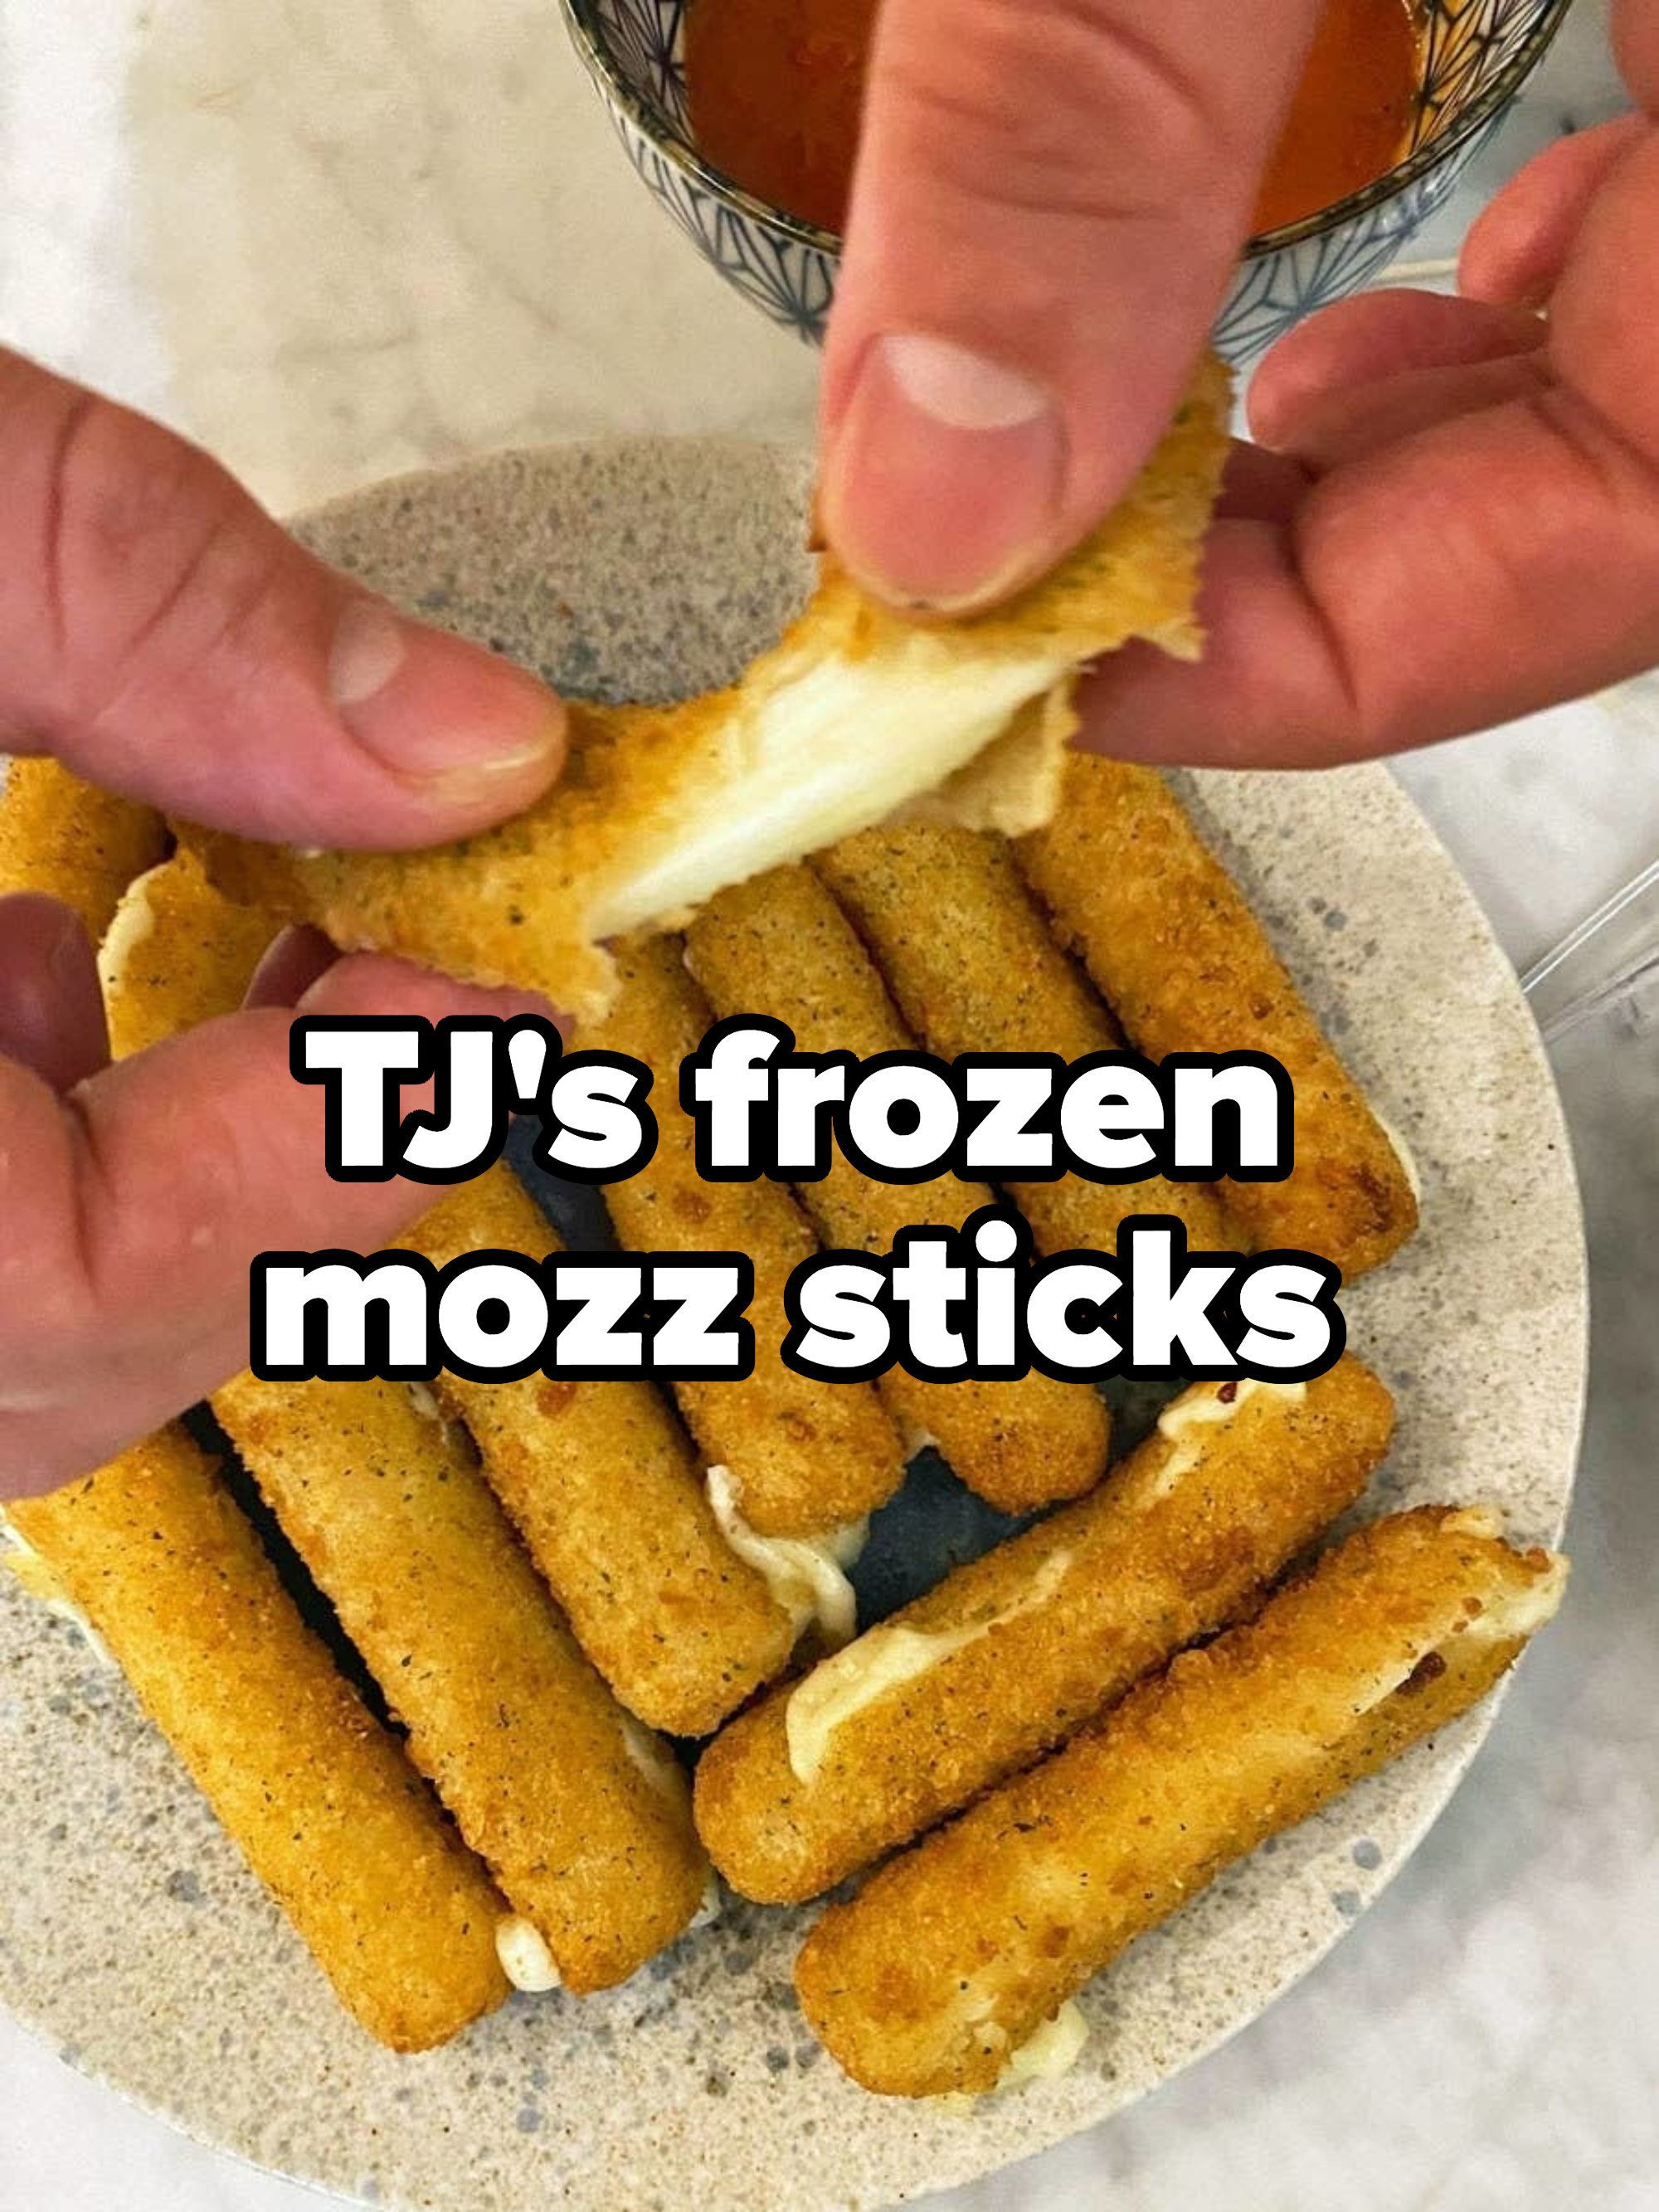 Pulling apart a frozen mozzarella stick.